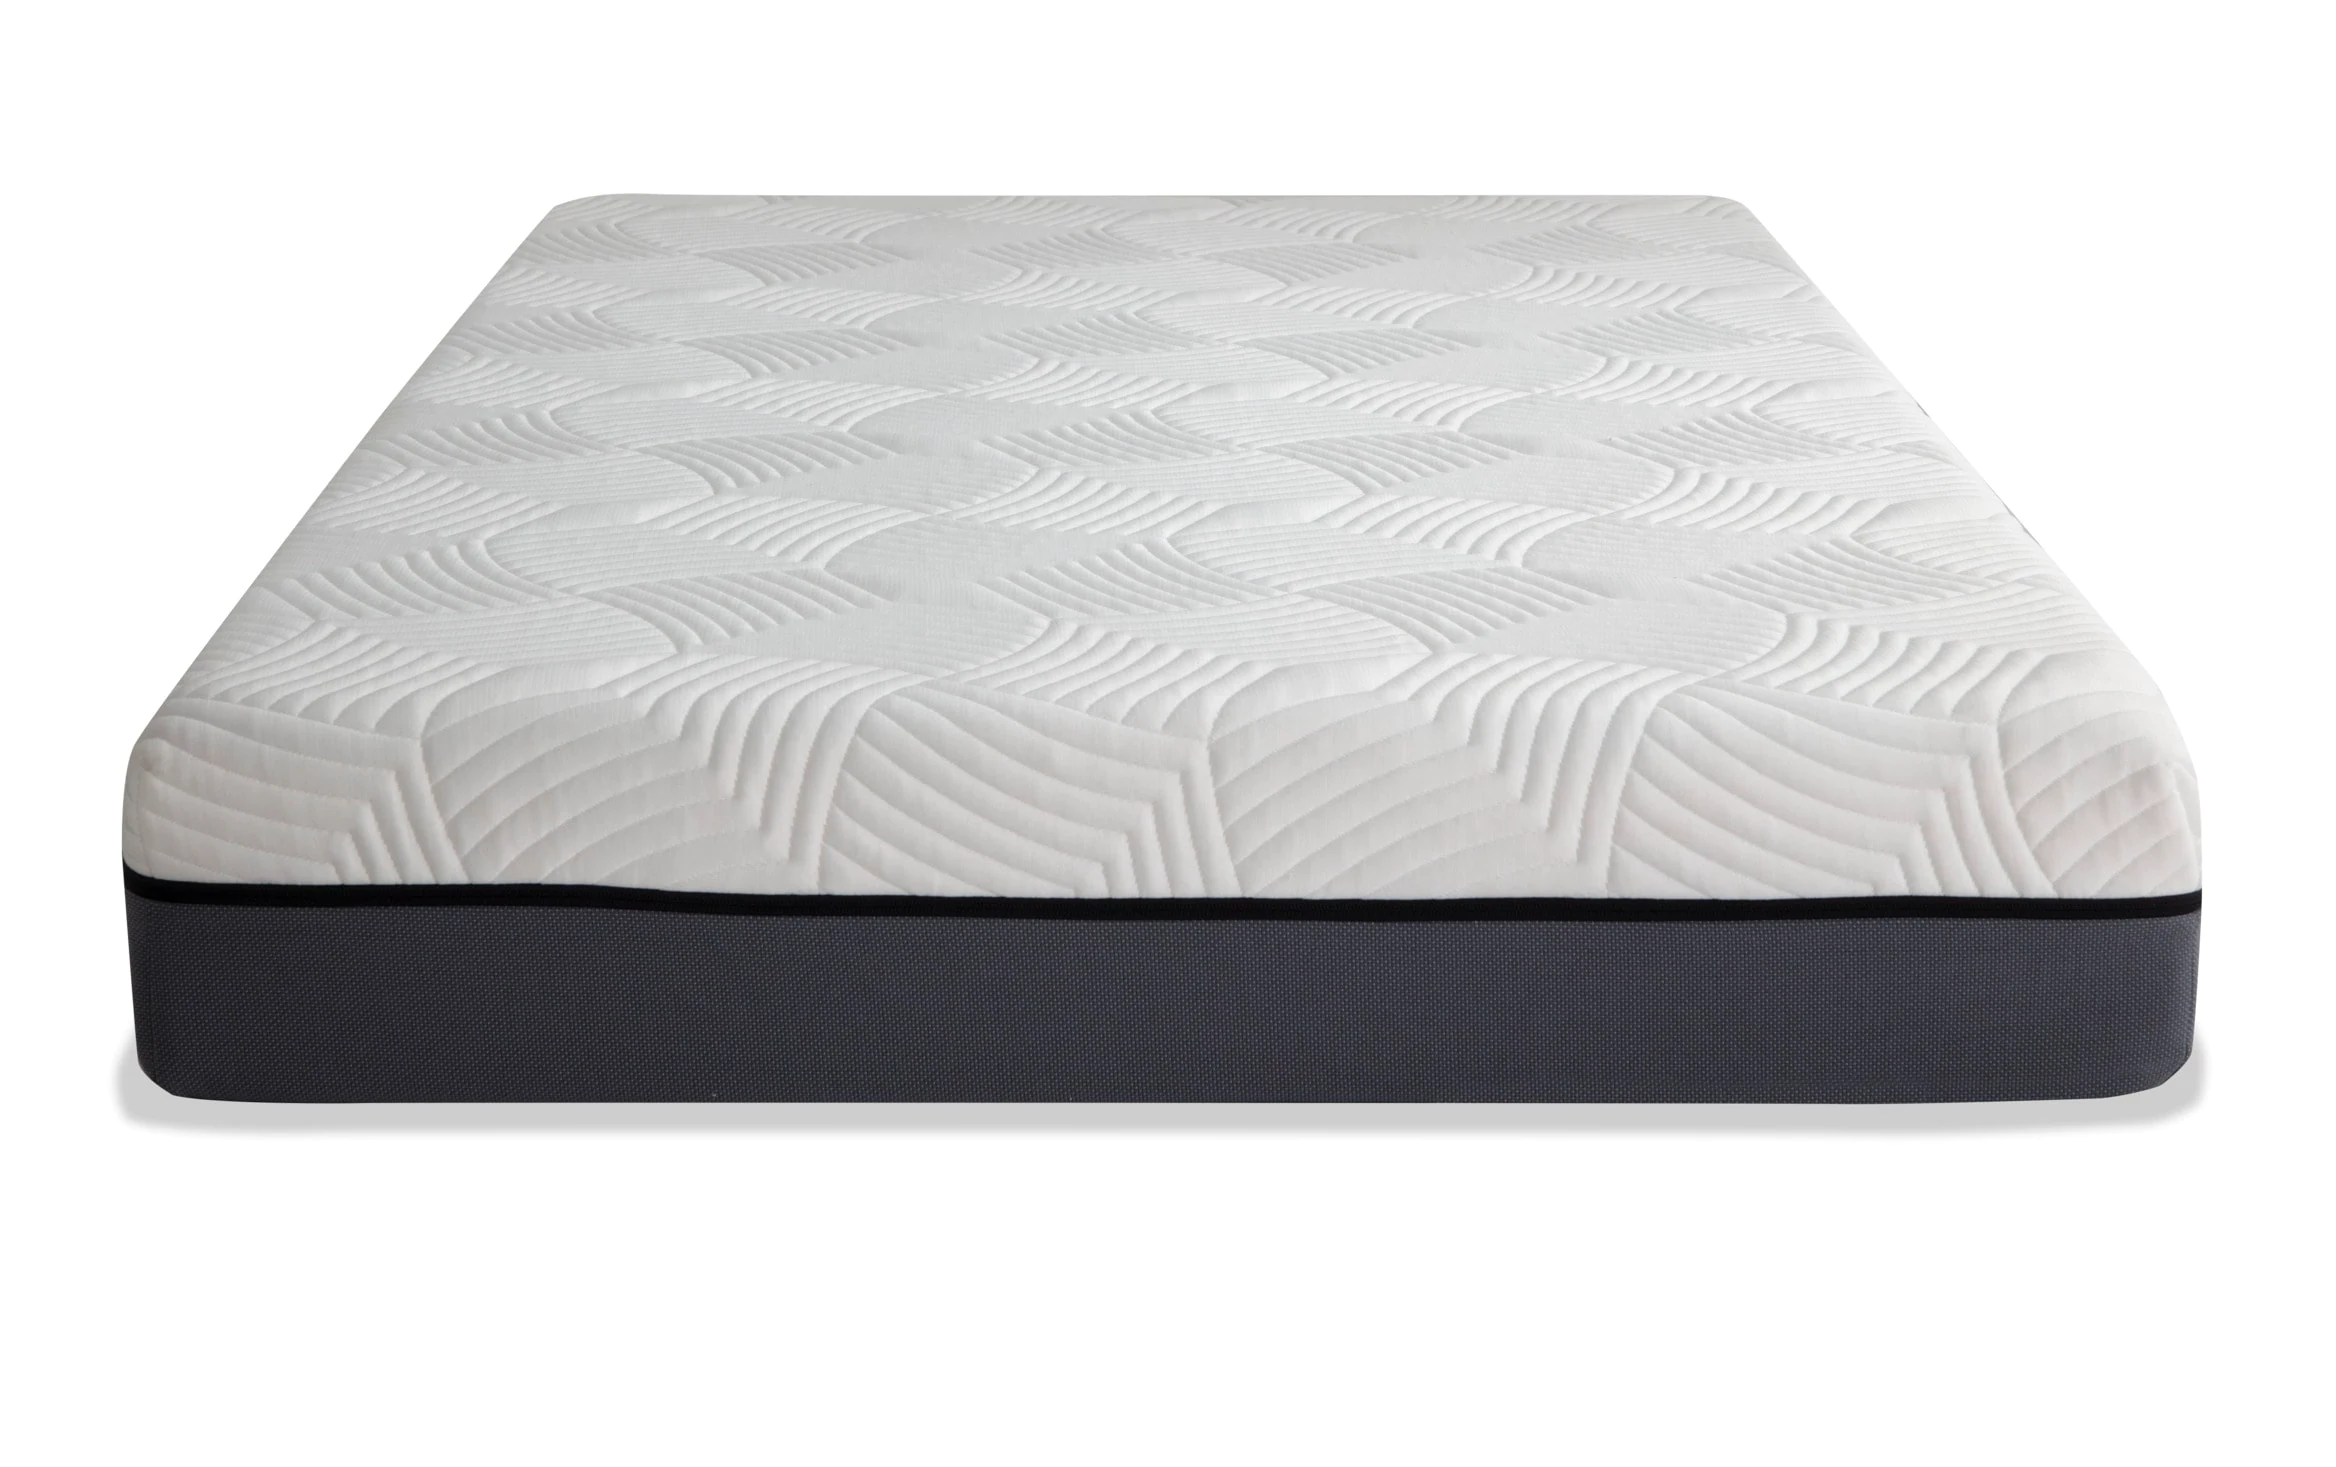 sleepy's curve mattress review